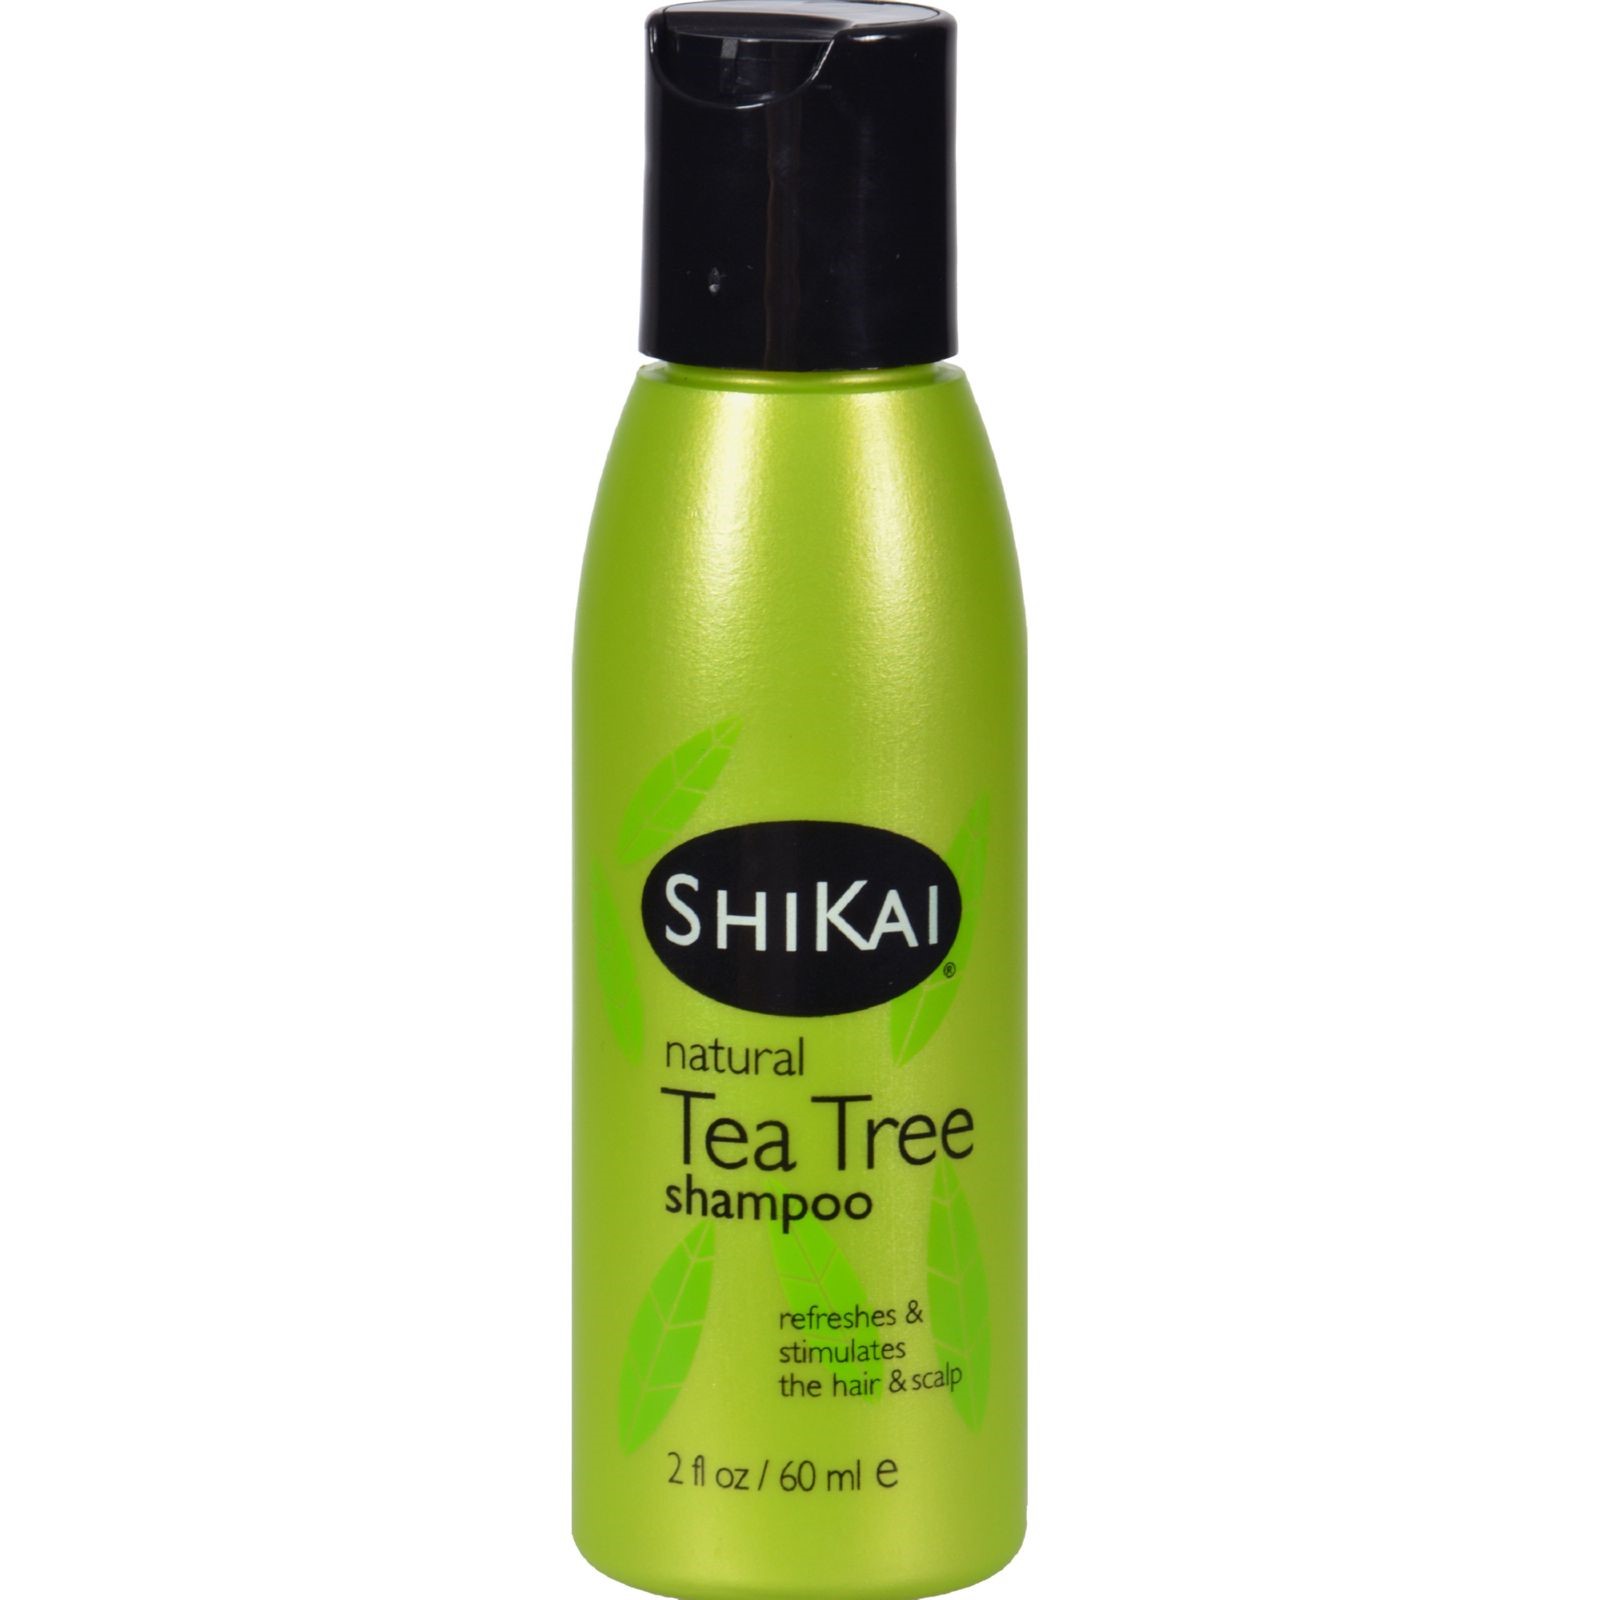 Shikai Products Tea Tree Shampoo, 2 Fl Oz - image 1 of 2